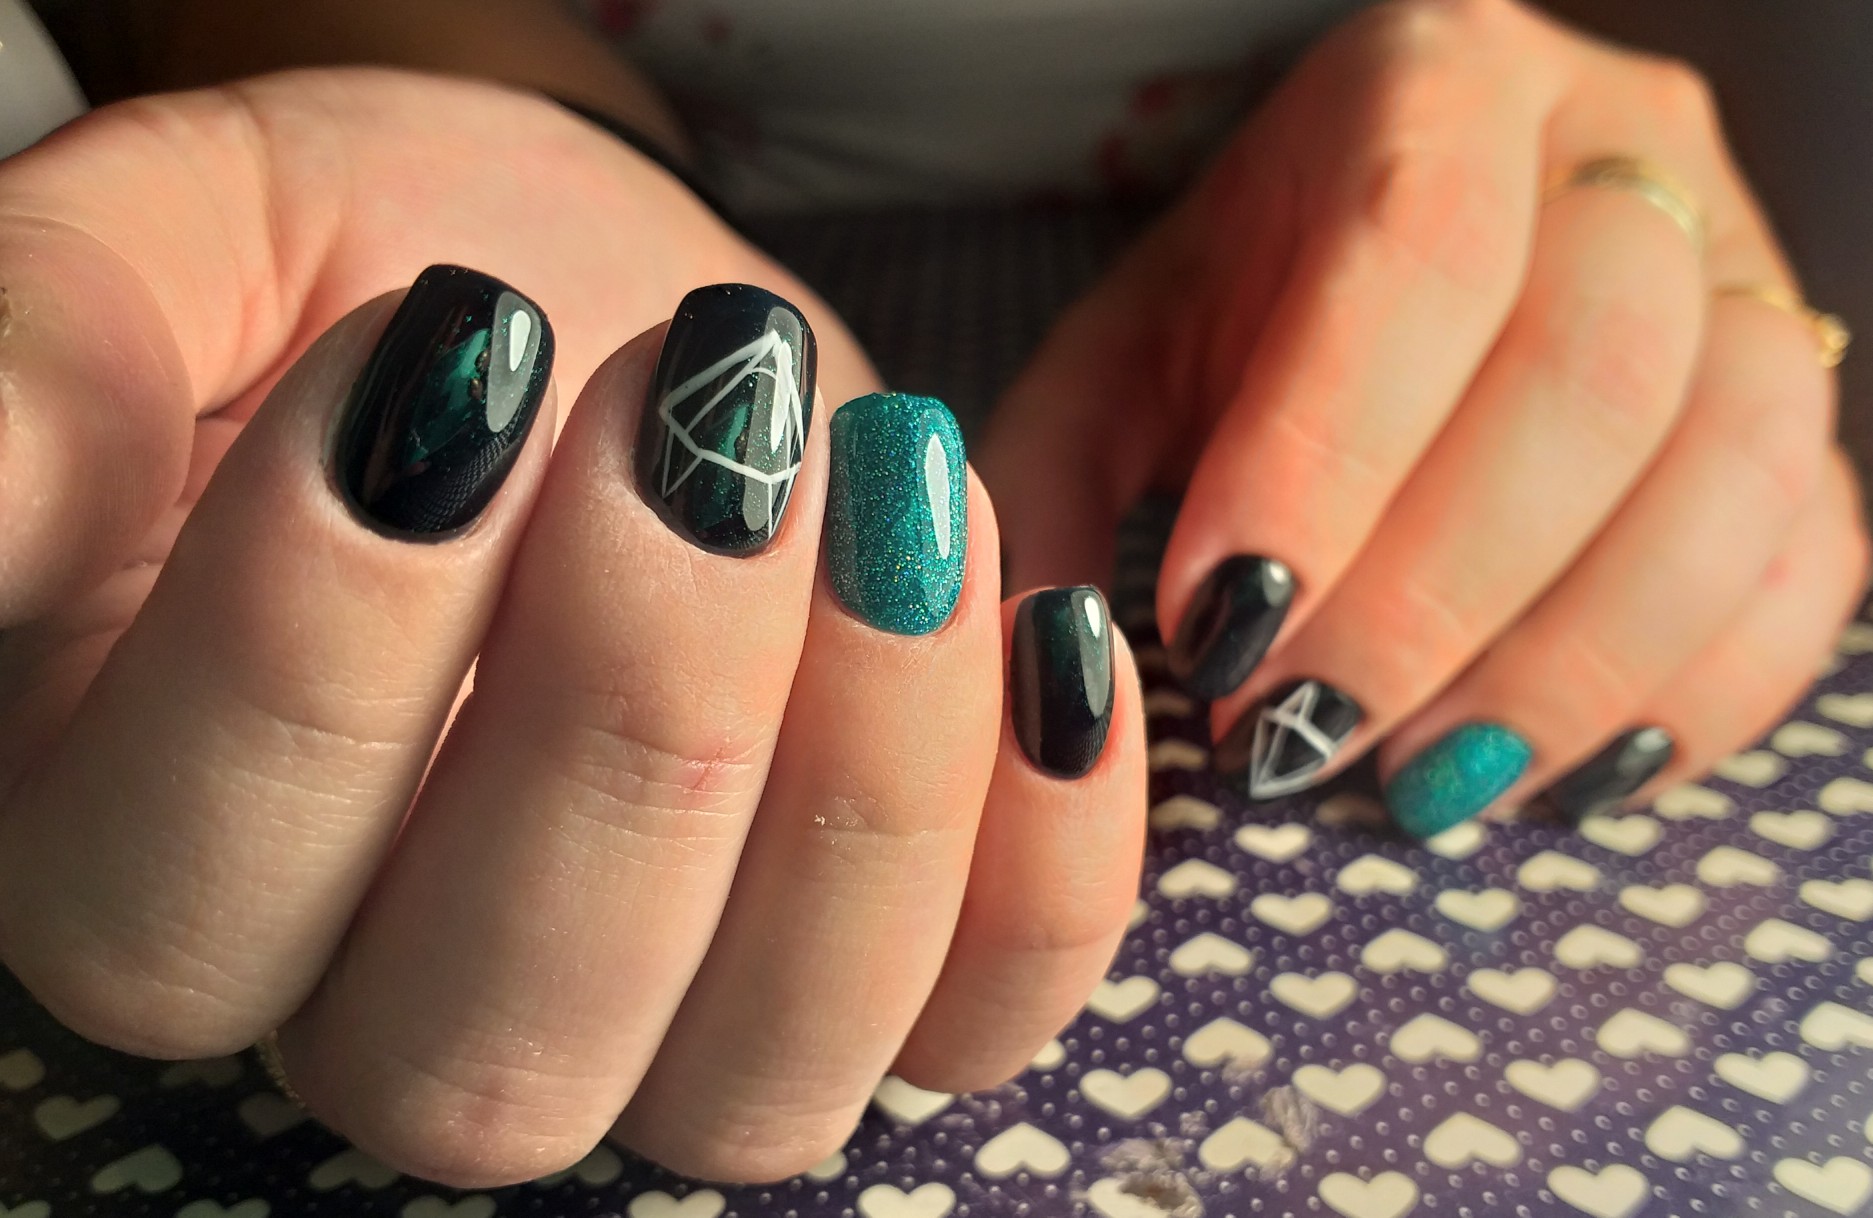 Маникюр с геометрическим слайдером и блестками в темно-зеленом цвете на короткие ногти.